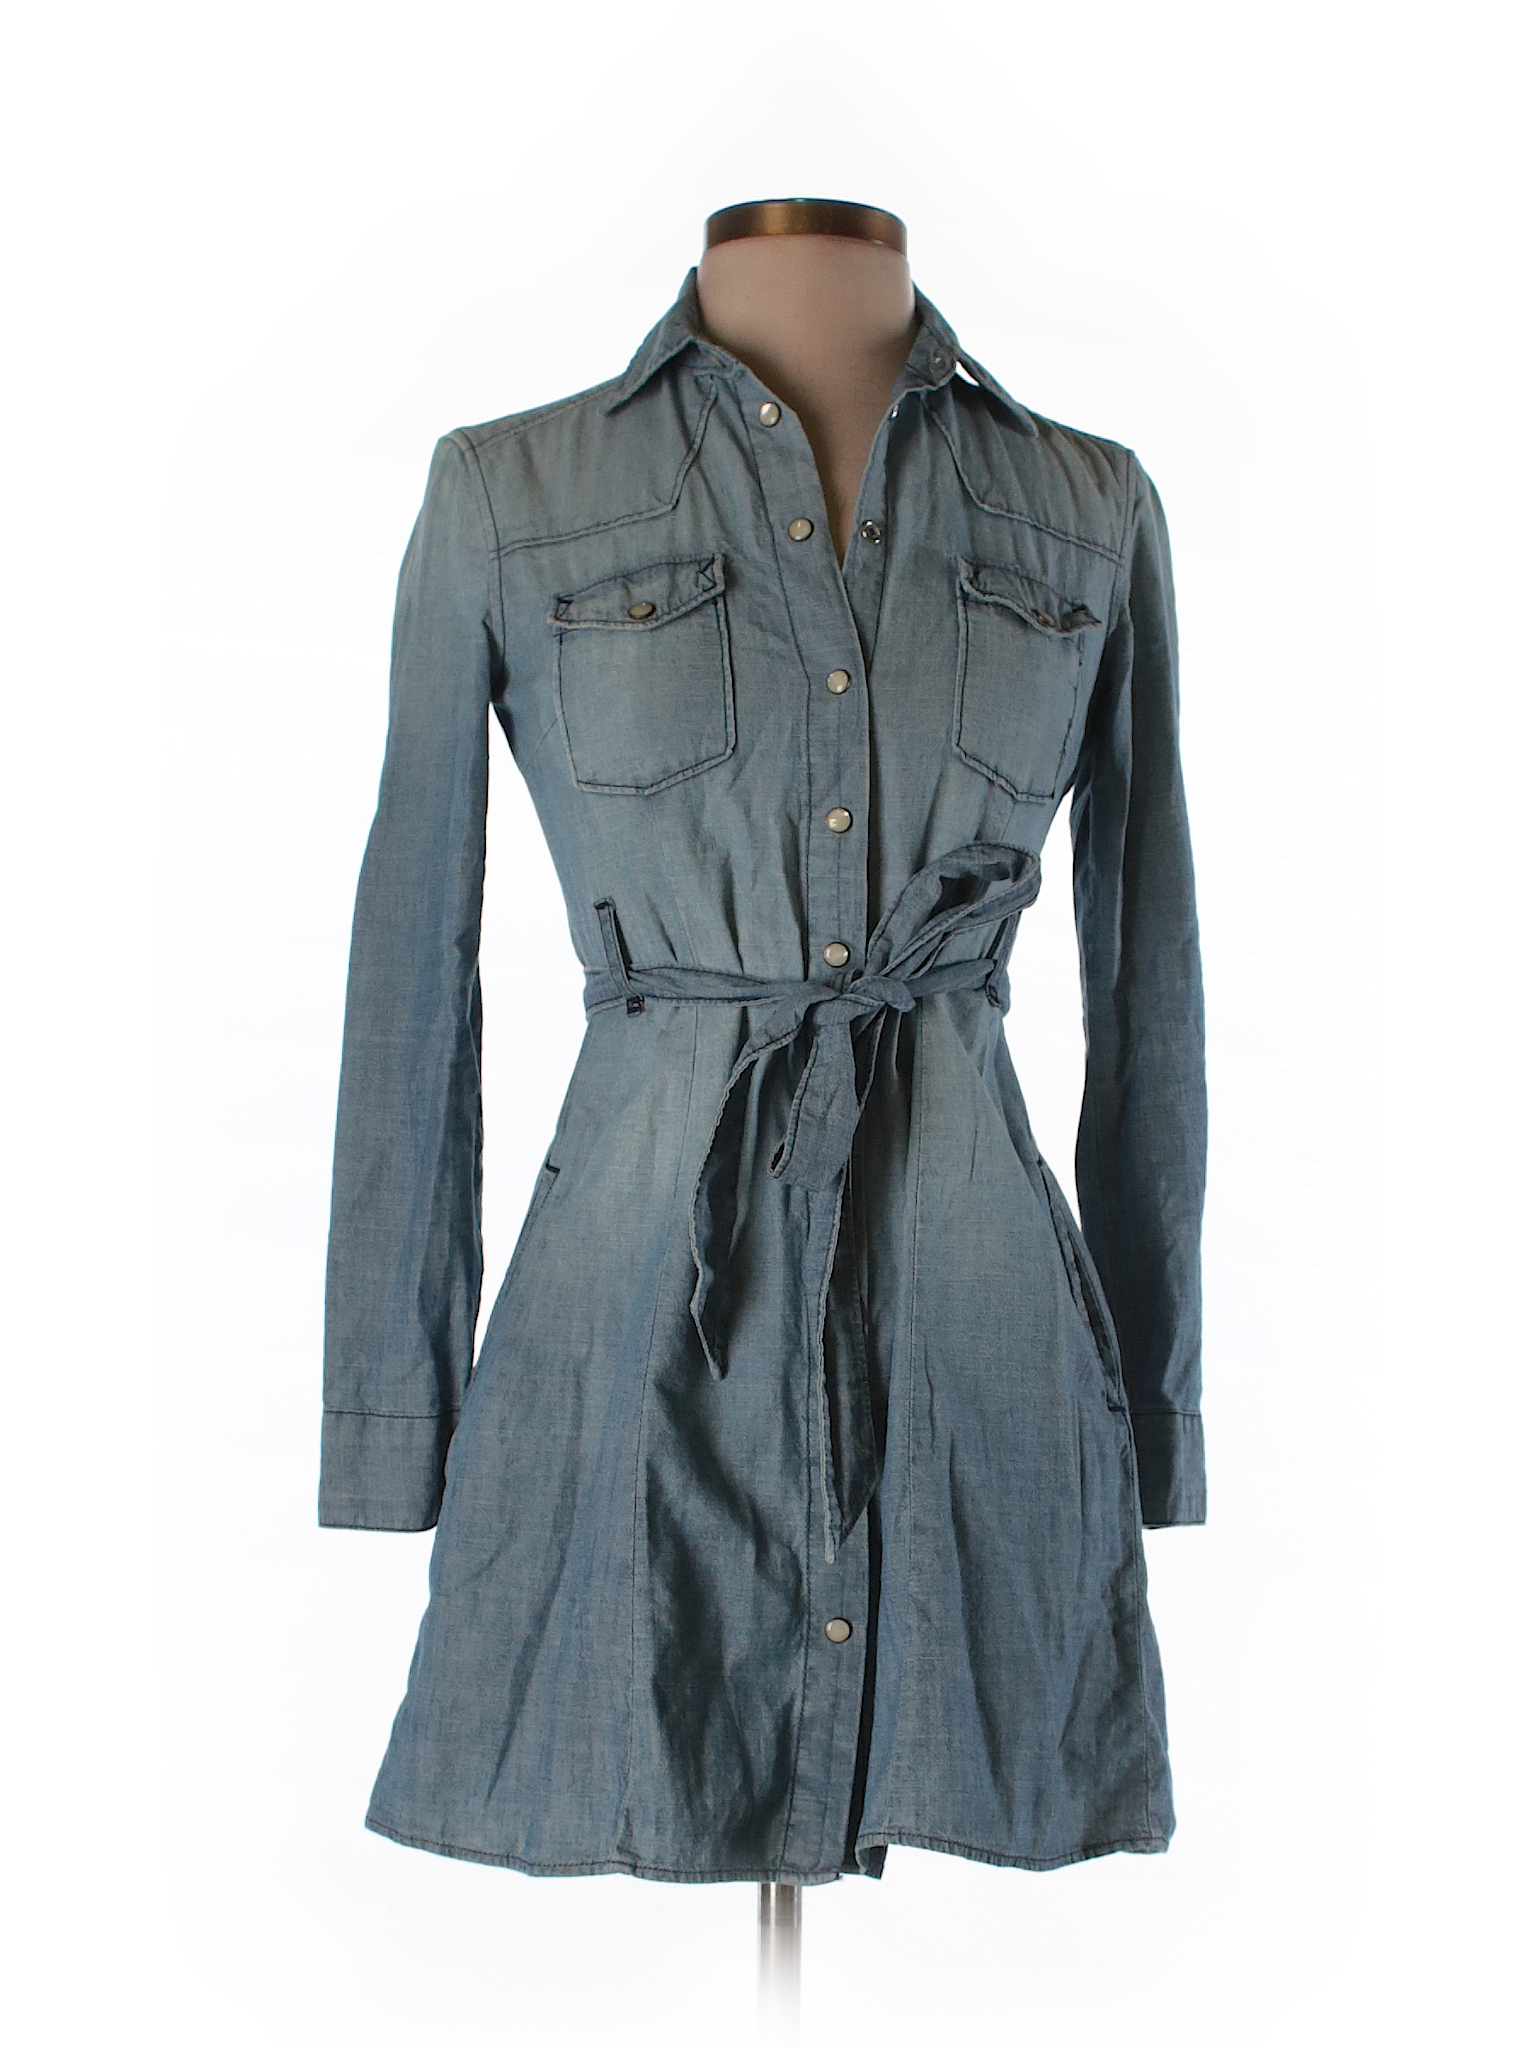 Gap 100% Cotton Solid Blue Casual Dress Size 00 (Petite) - 81% off ...